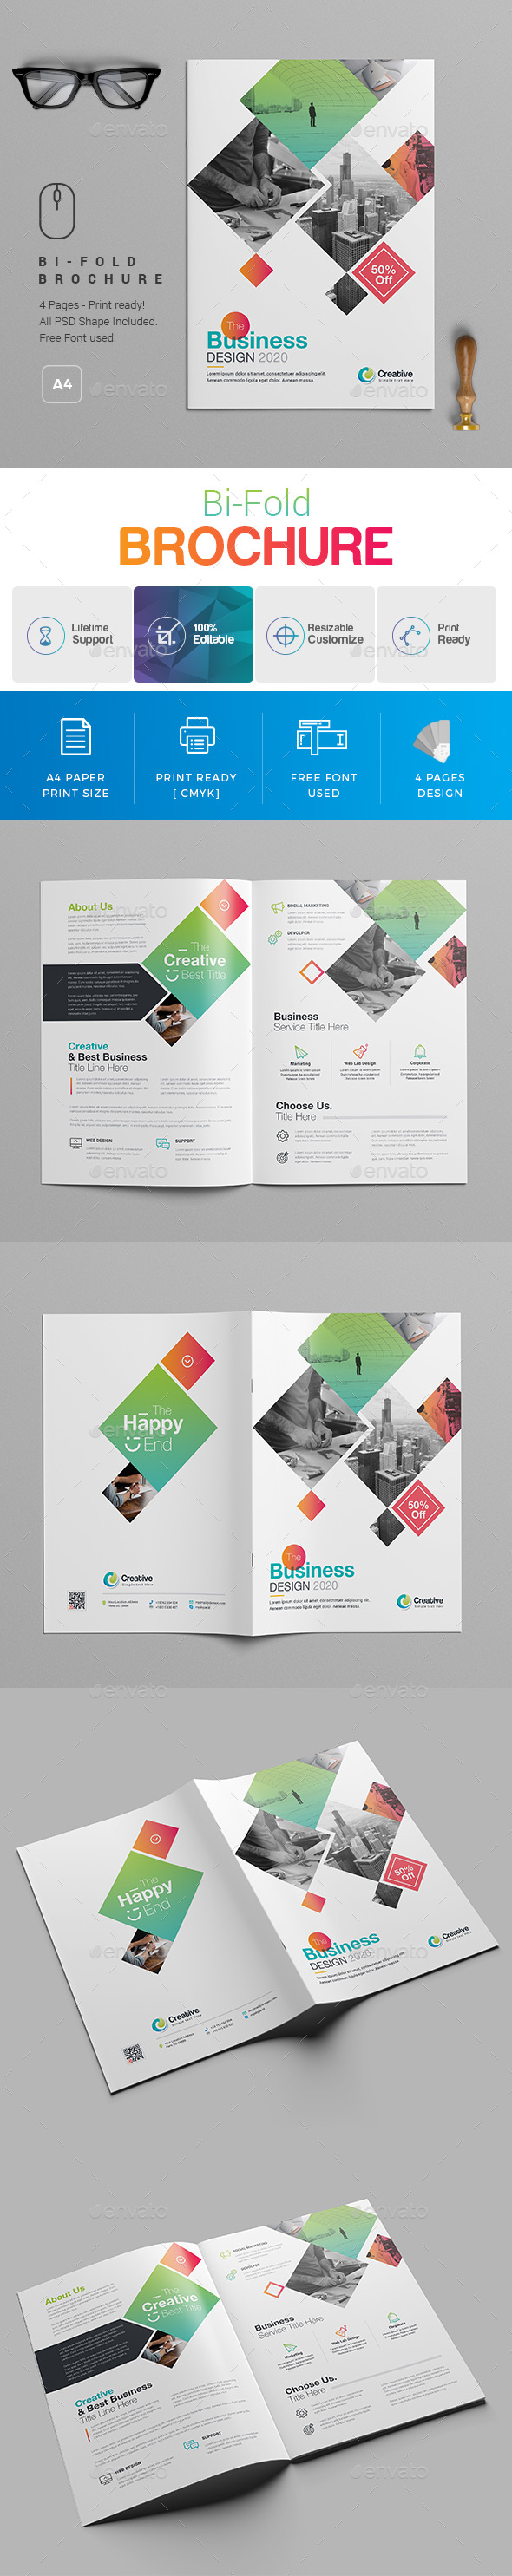 Bi-Fold Brochure in Brochure Templates